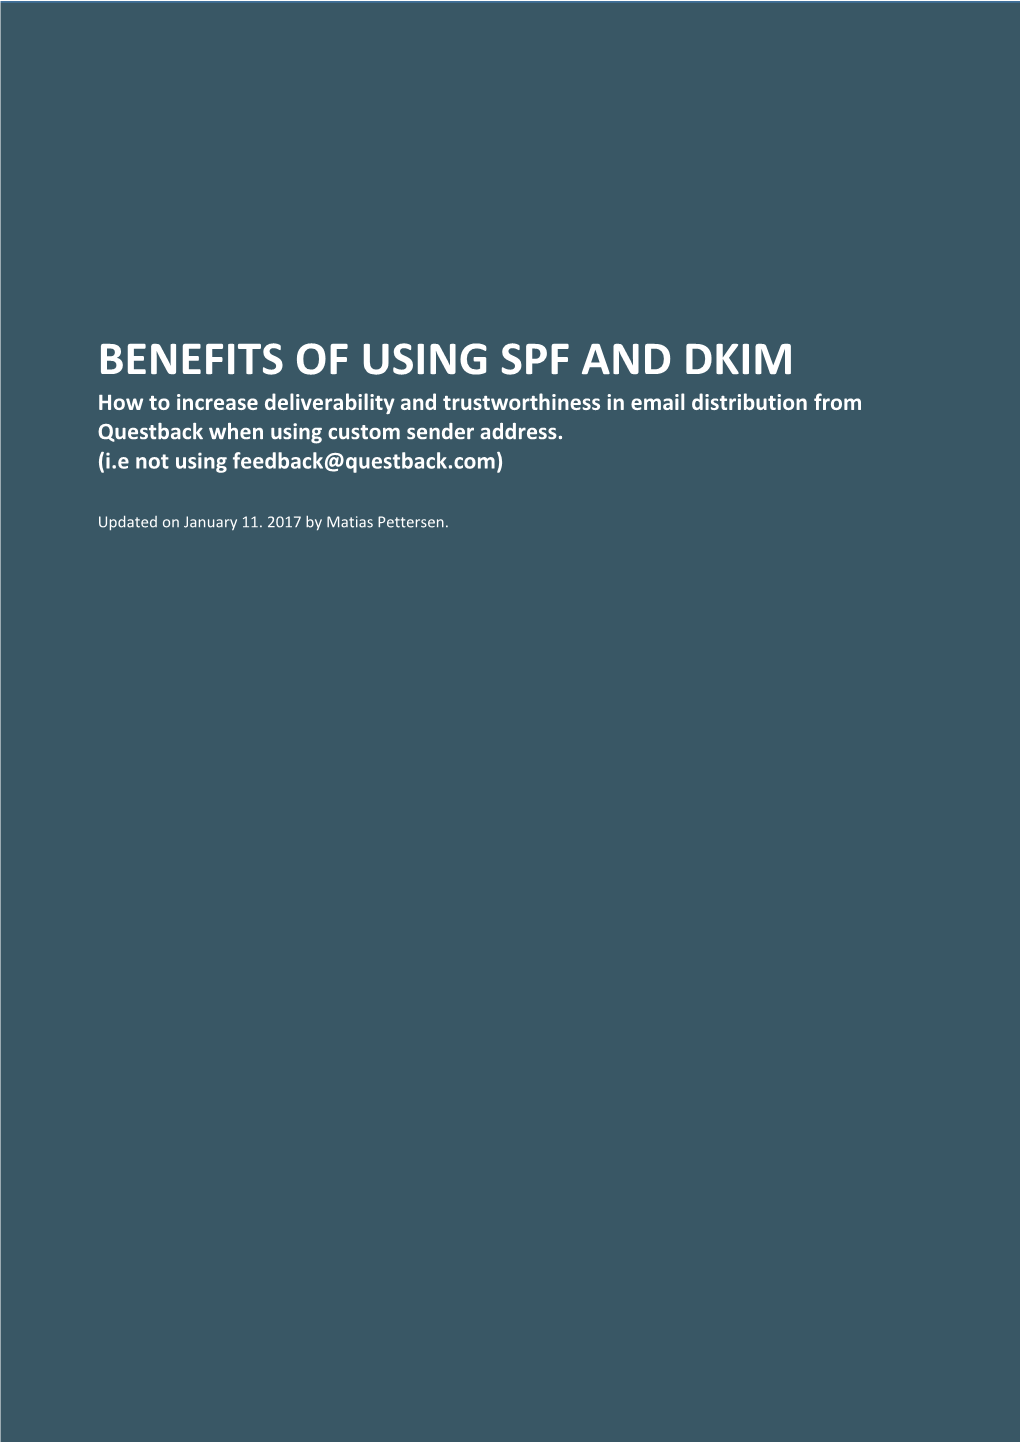 Benefits of Using SPF & DKIM